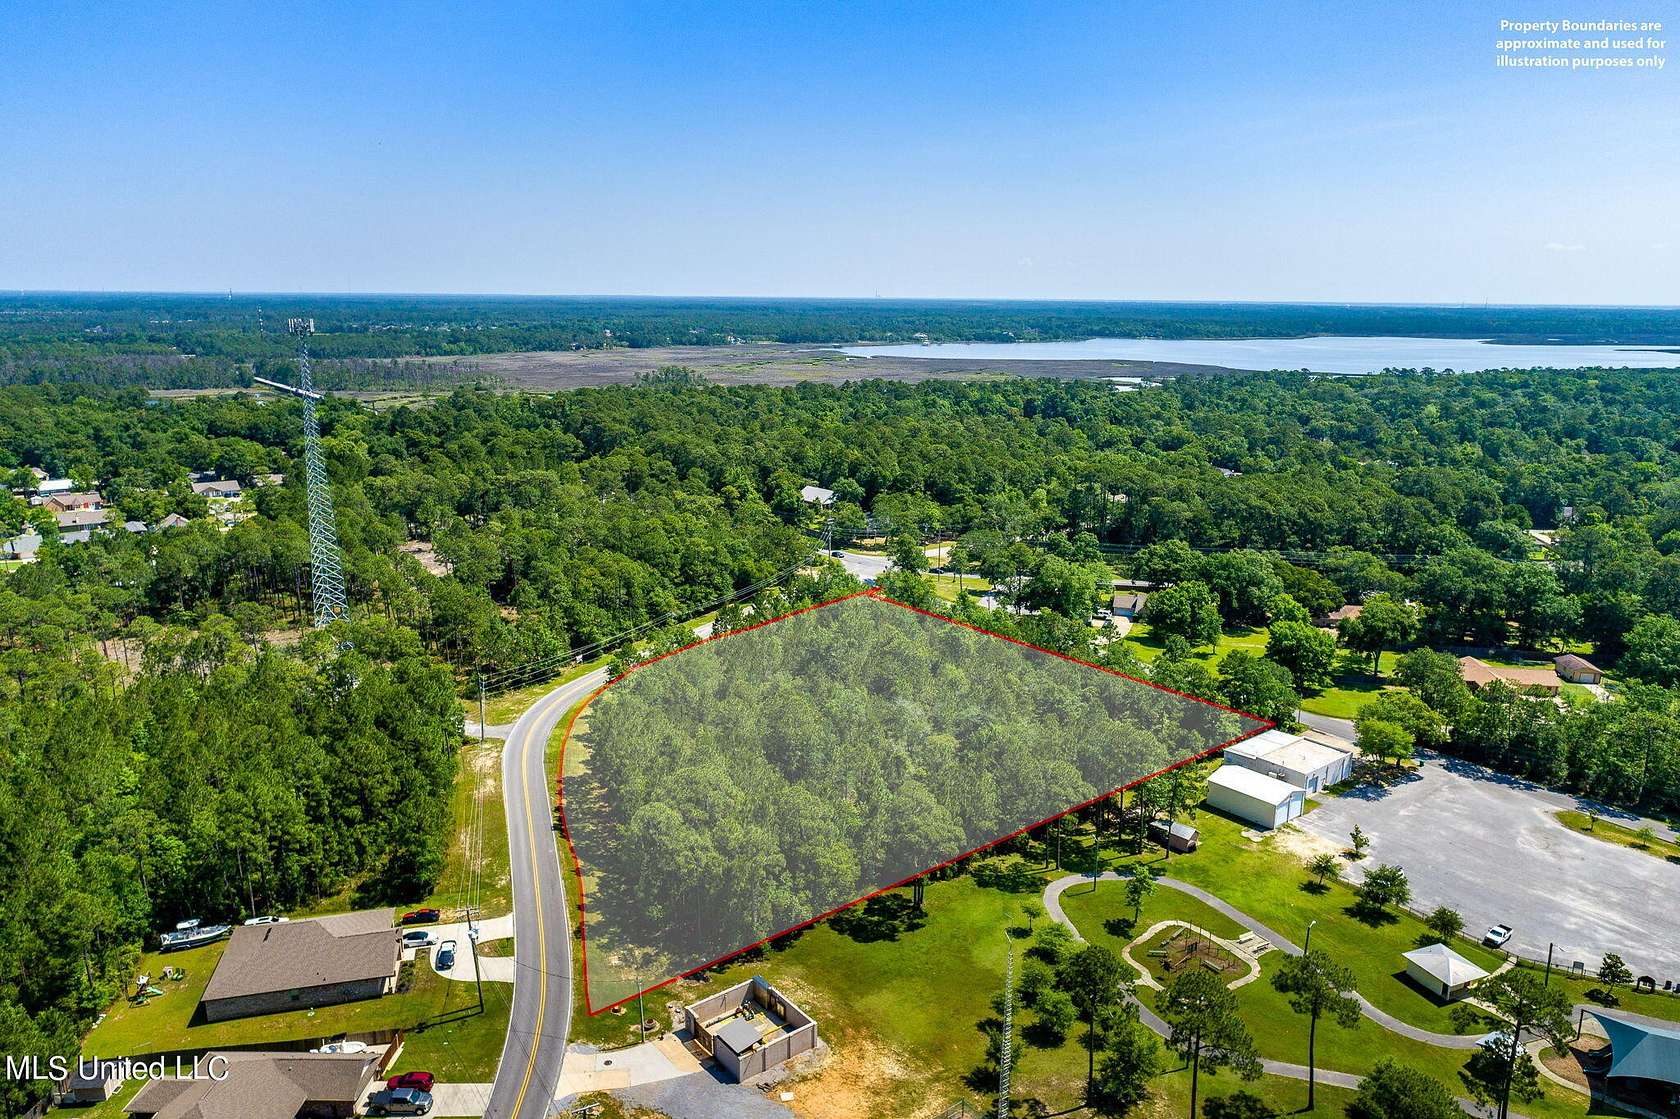 4 Acres of Commercial Land for Sale in Ocean Springs, Mississippi